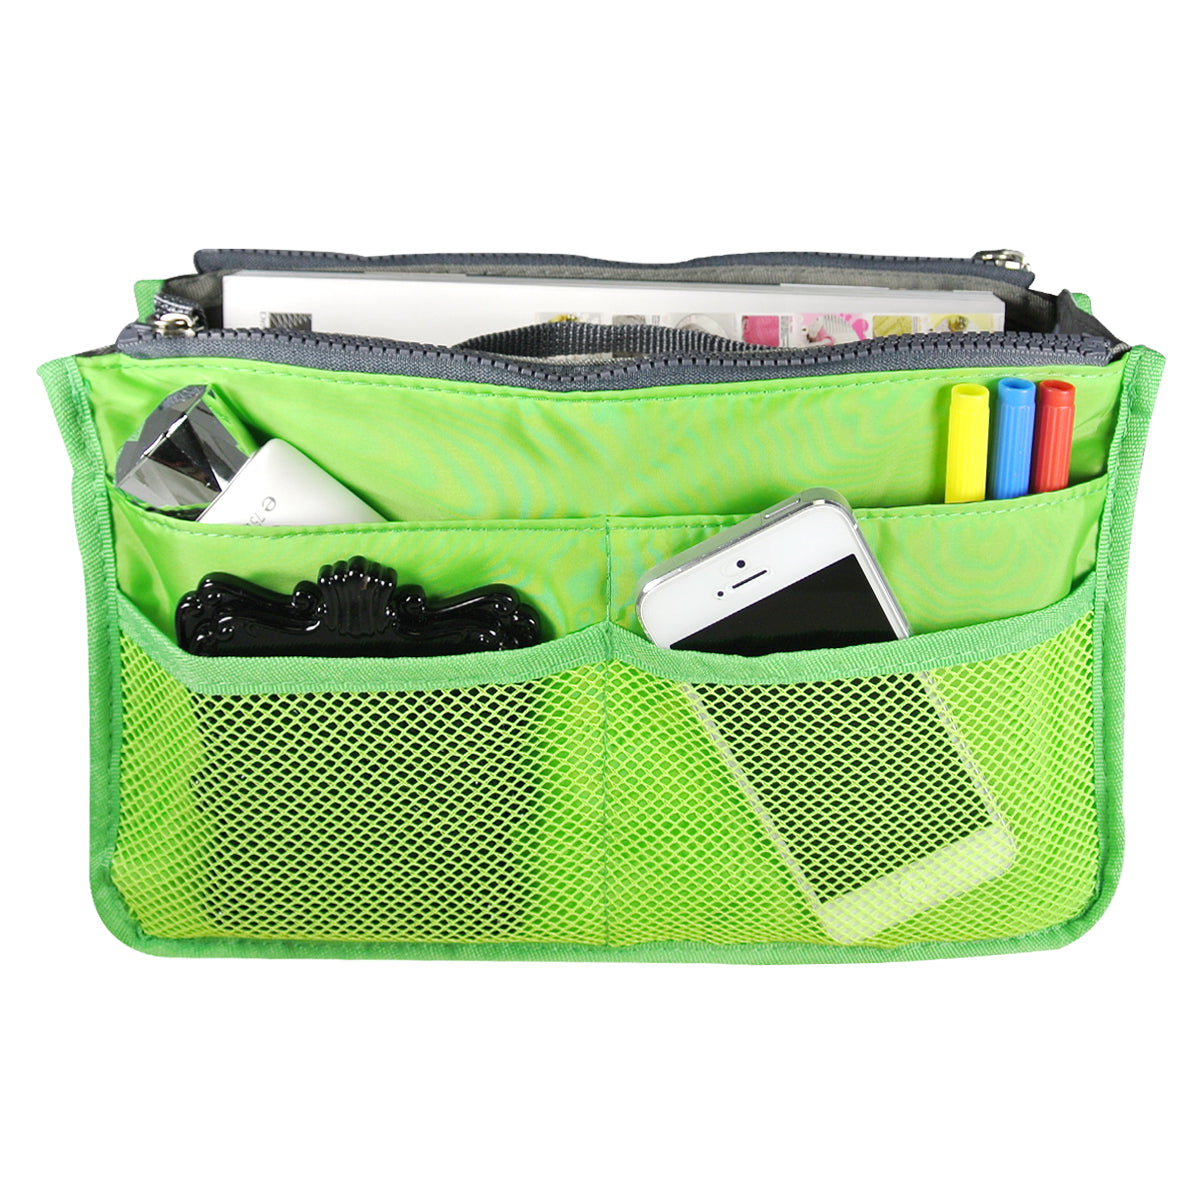 Wrapables Unisex Bag Insert Organizer, Travel Bag Organizer Green